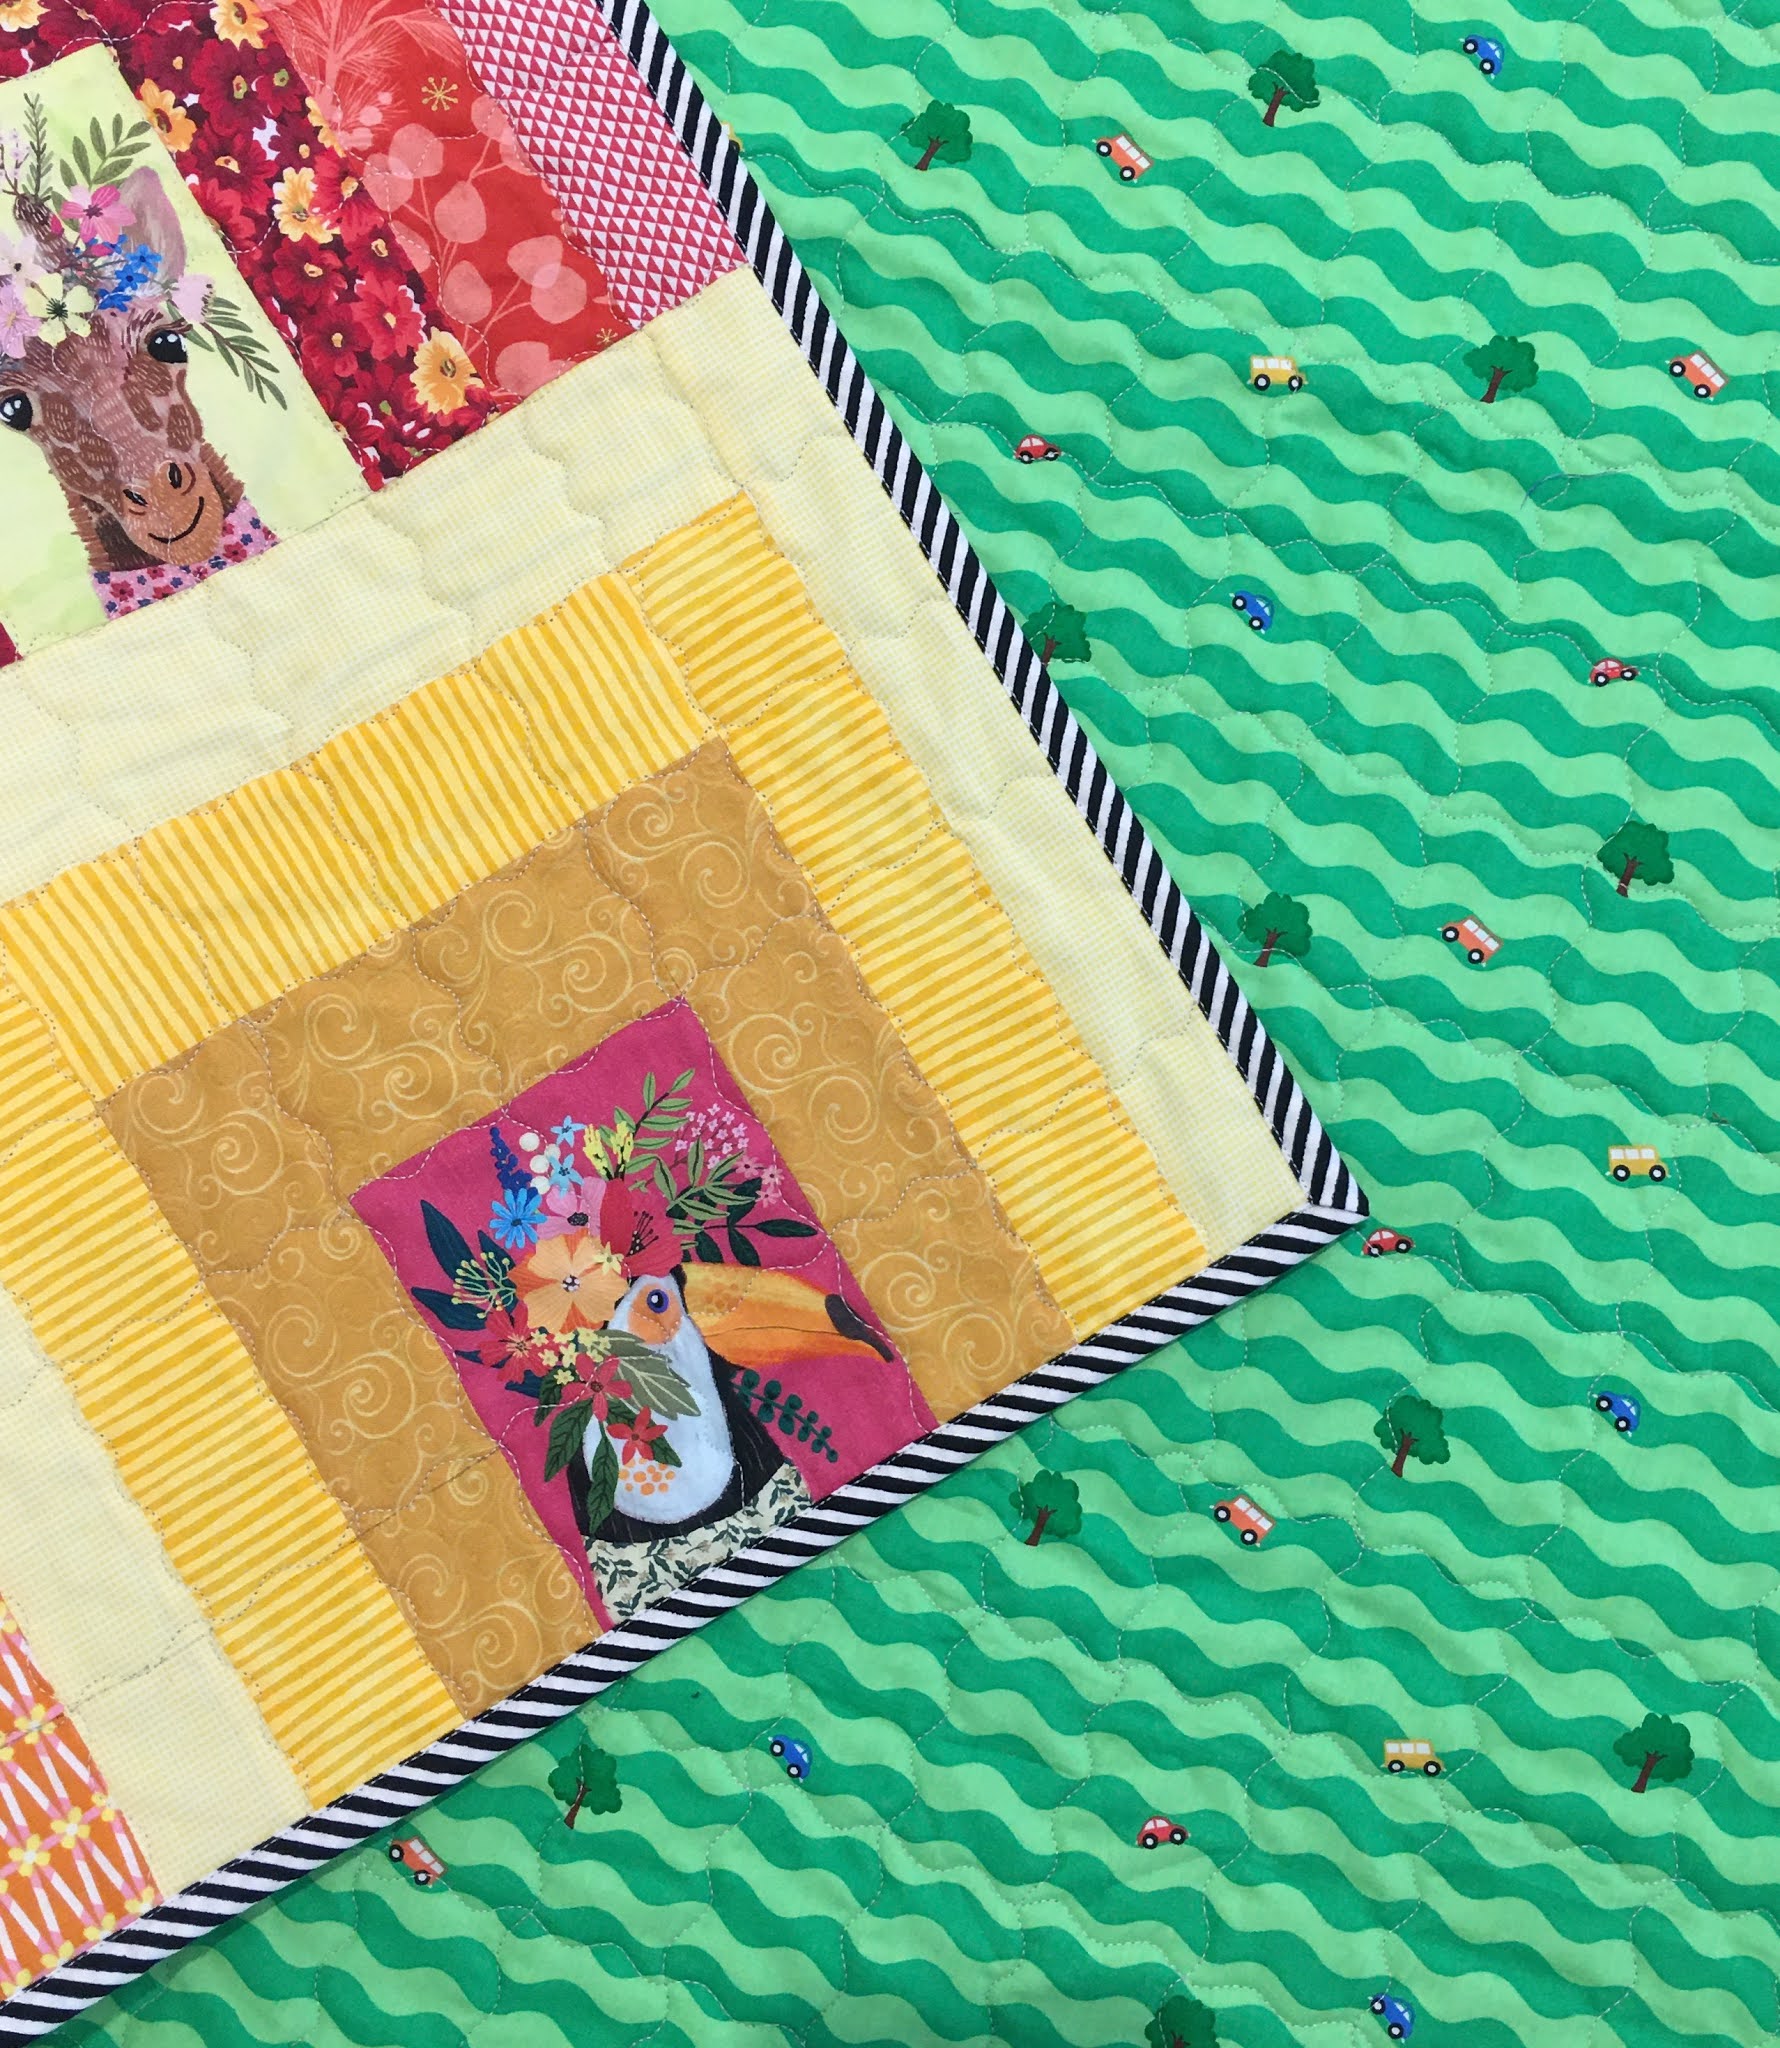 Sew Preeti Quilts: New Beginnings